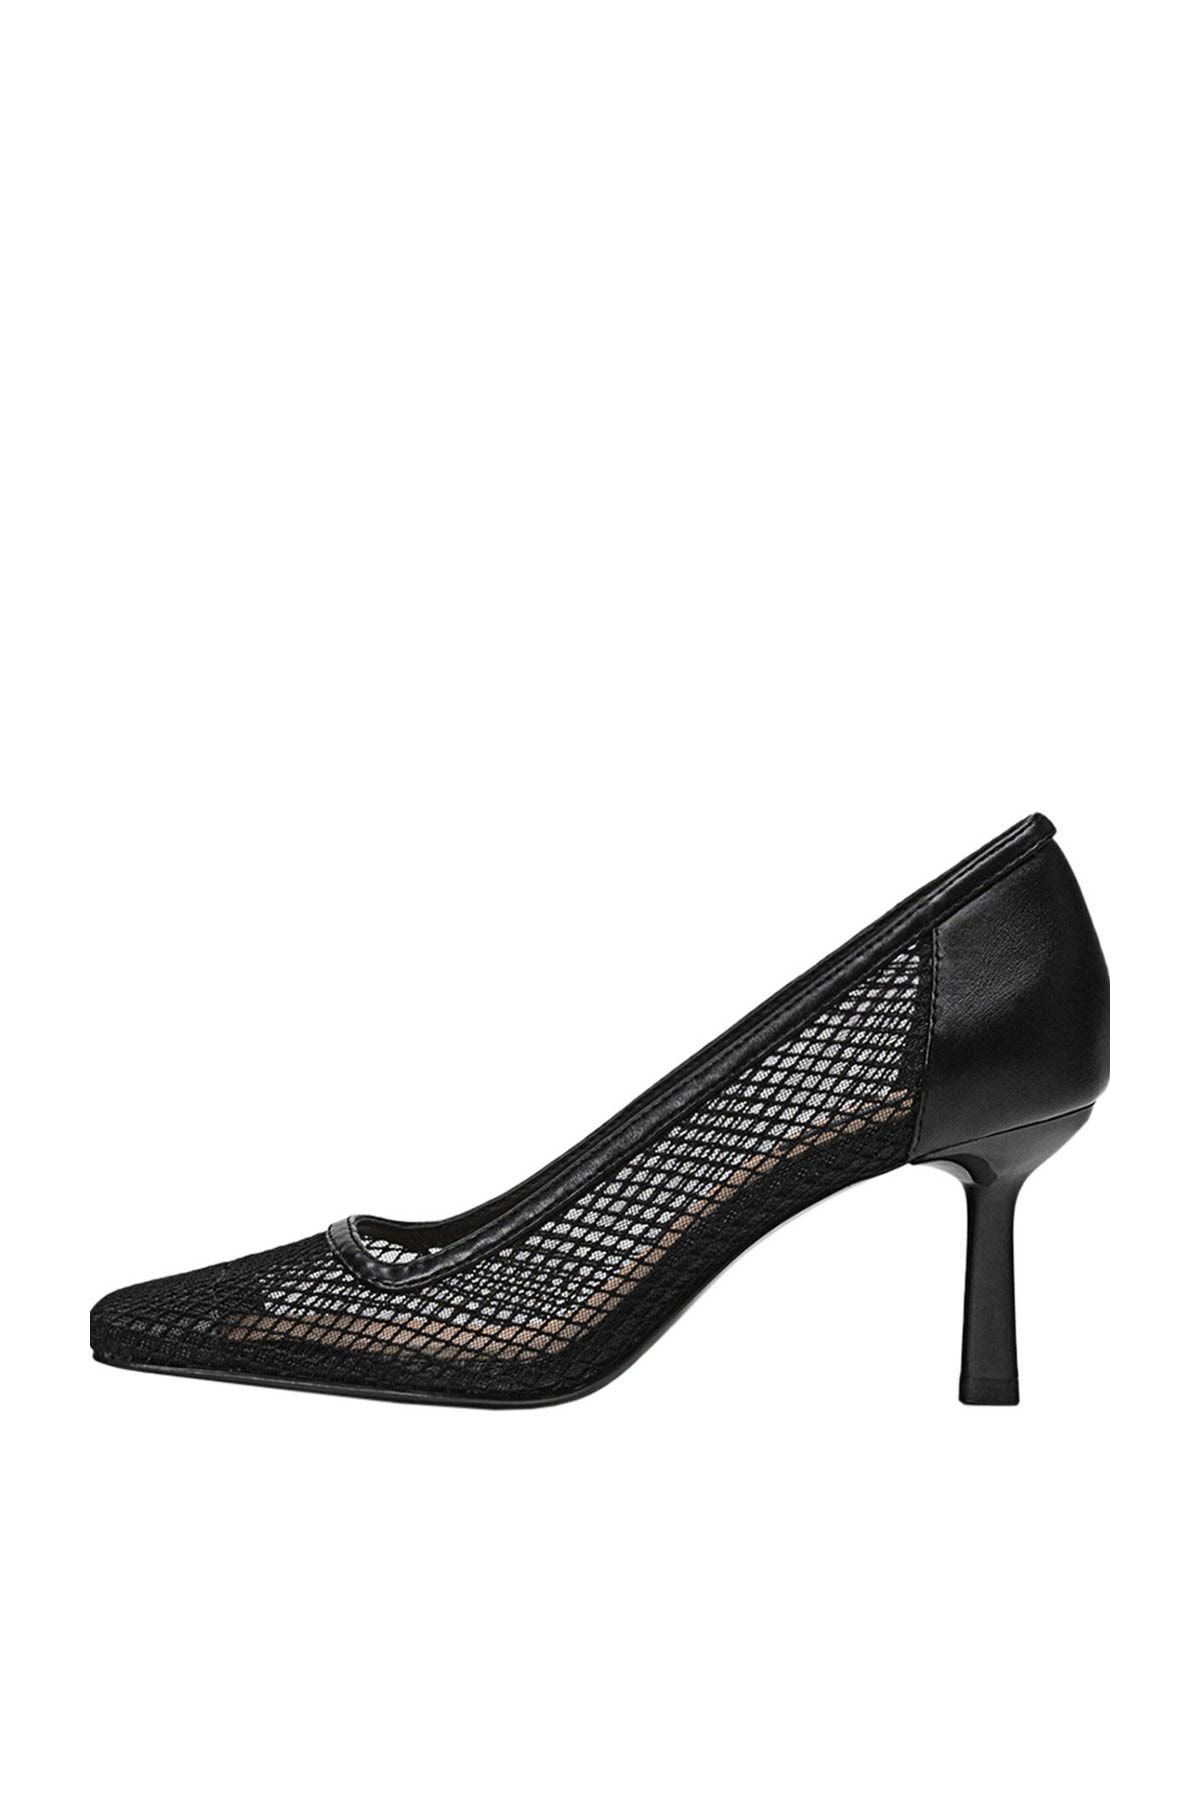 Stradivarius Kadın Siyah Fileli Yüksek Topuklu Ayakkabı 19657670